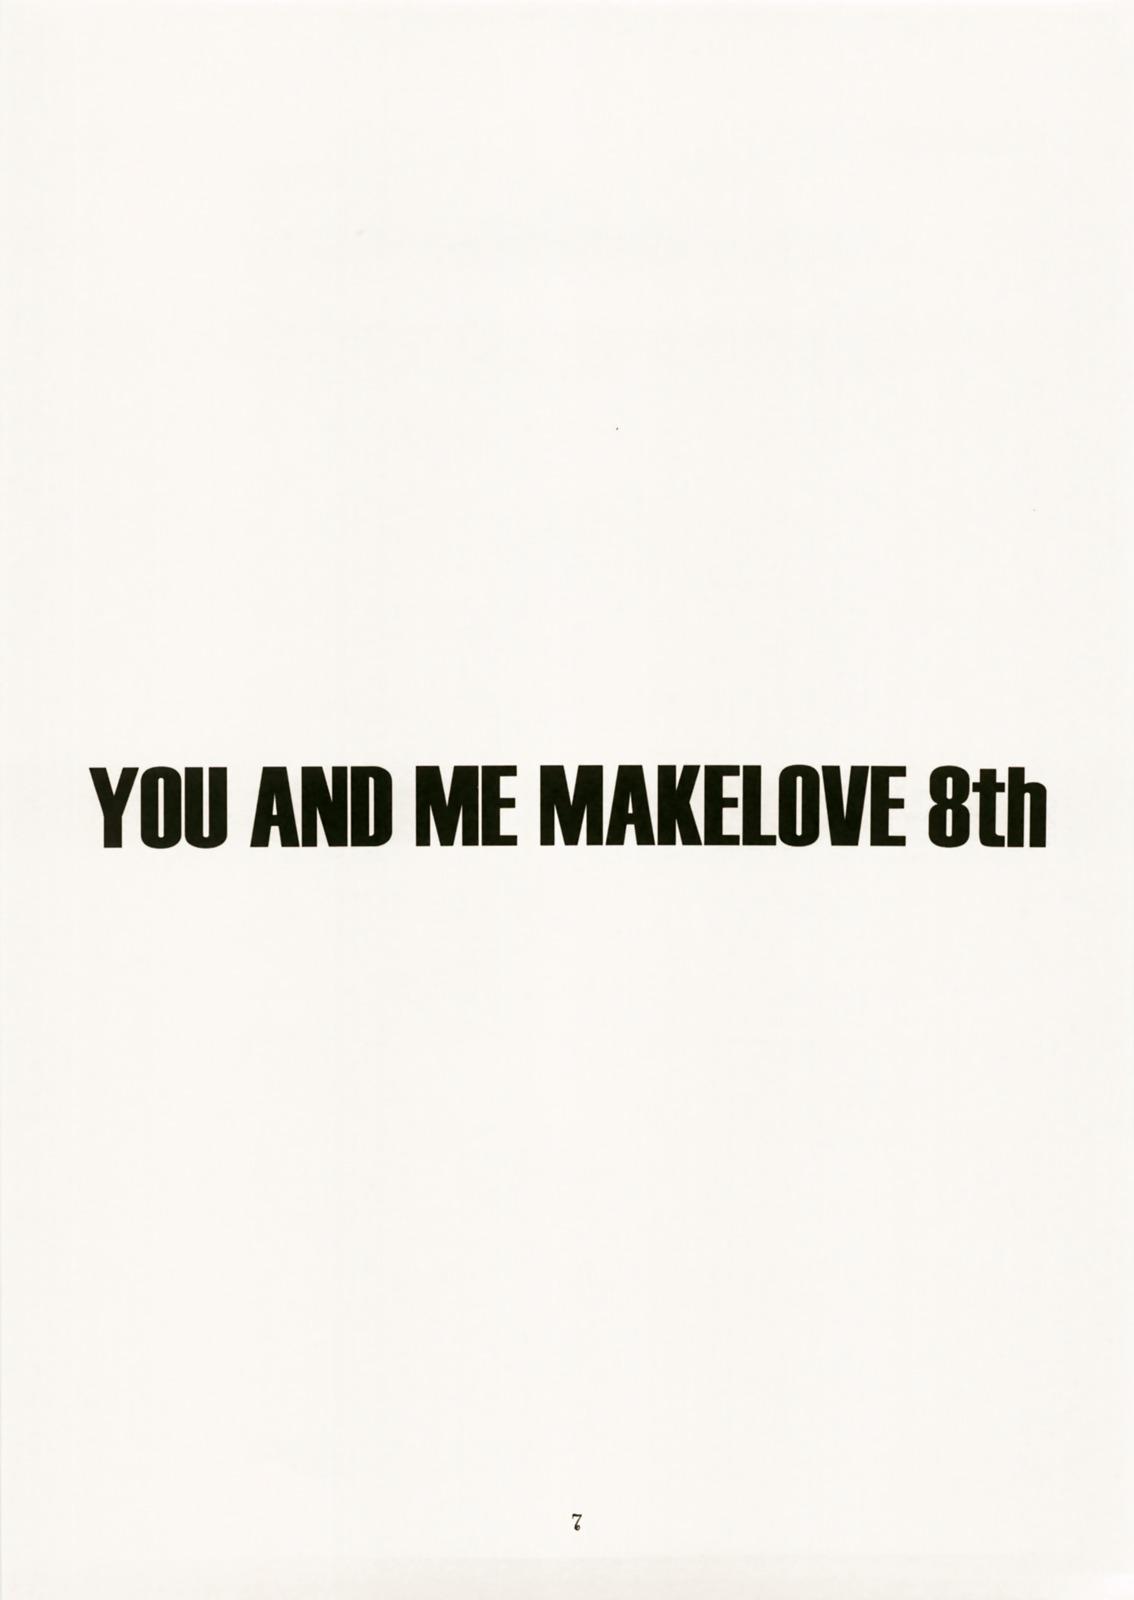 You and Me Make Love 8th 4